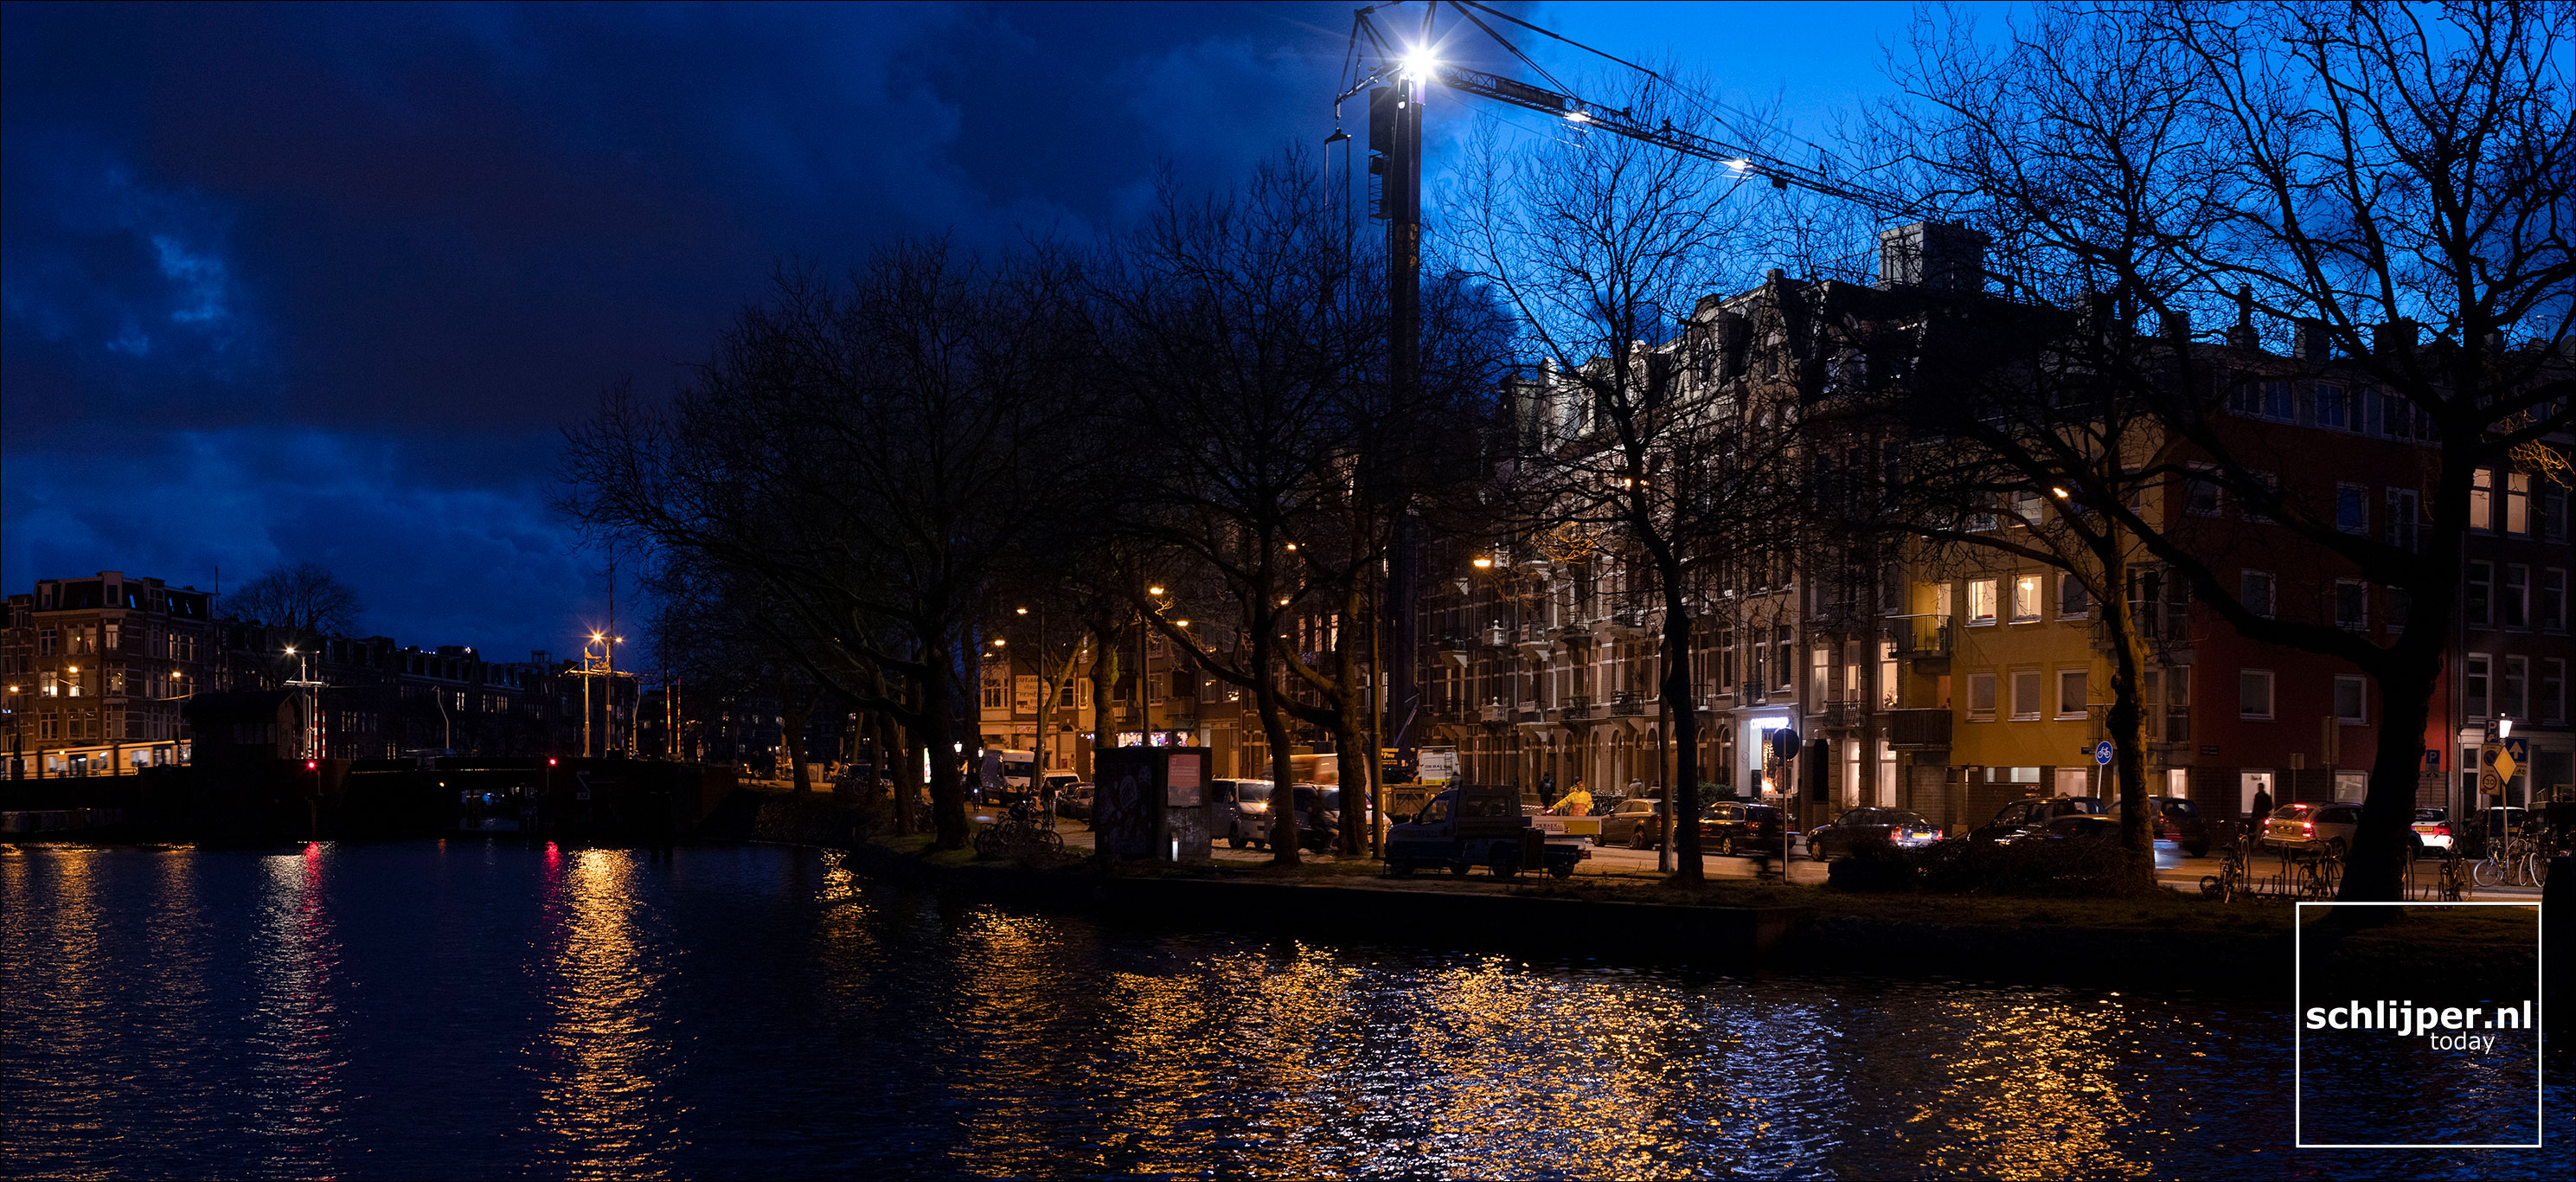 Nederland, Amsterdam, 12 februari 2020